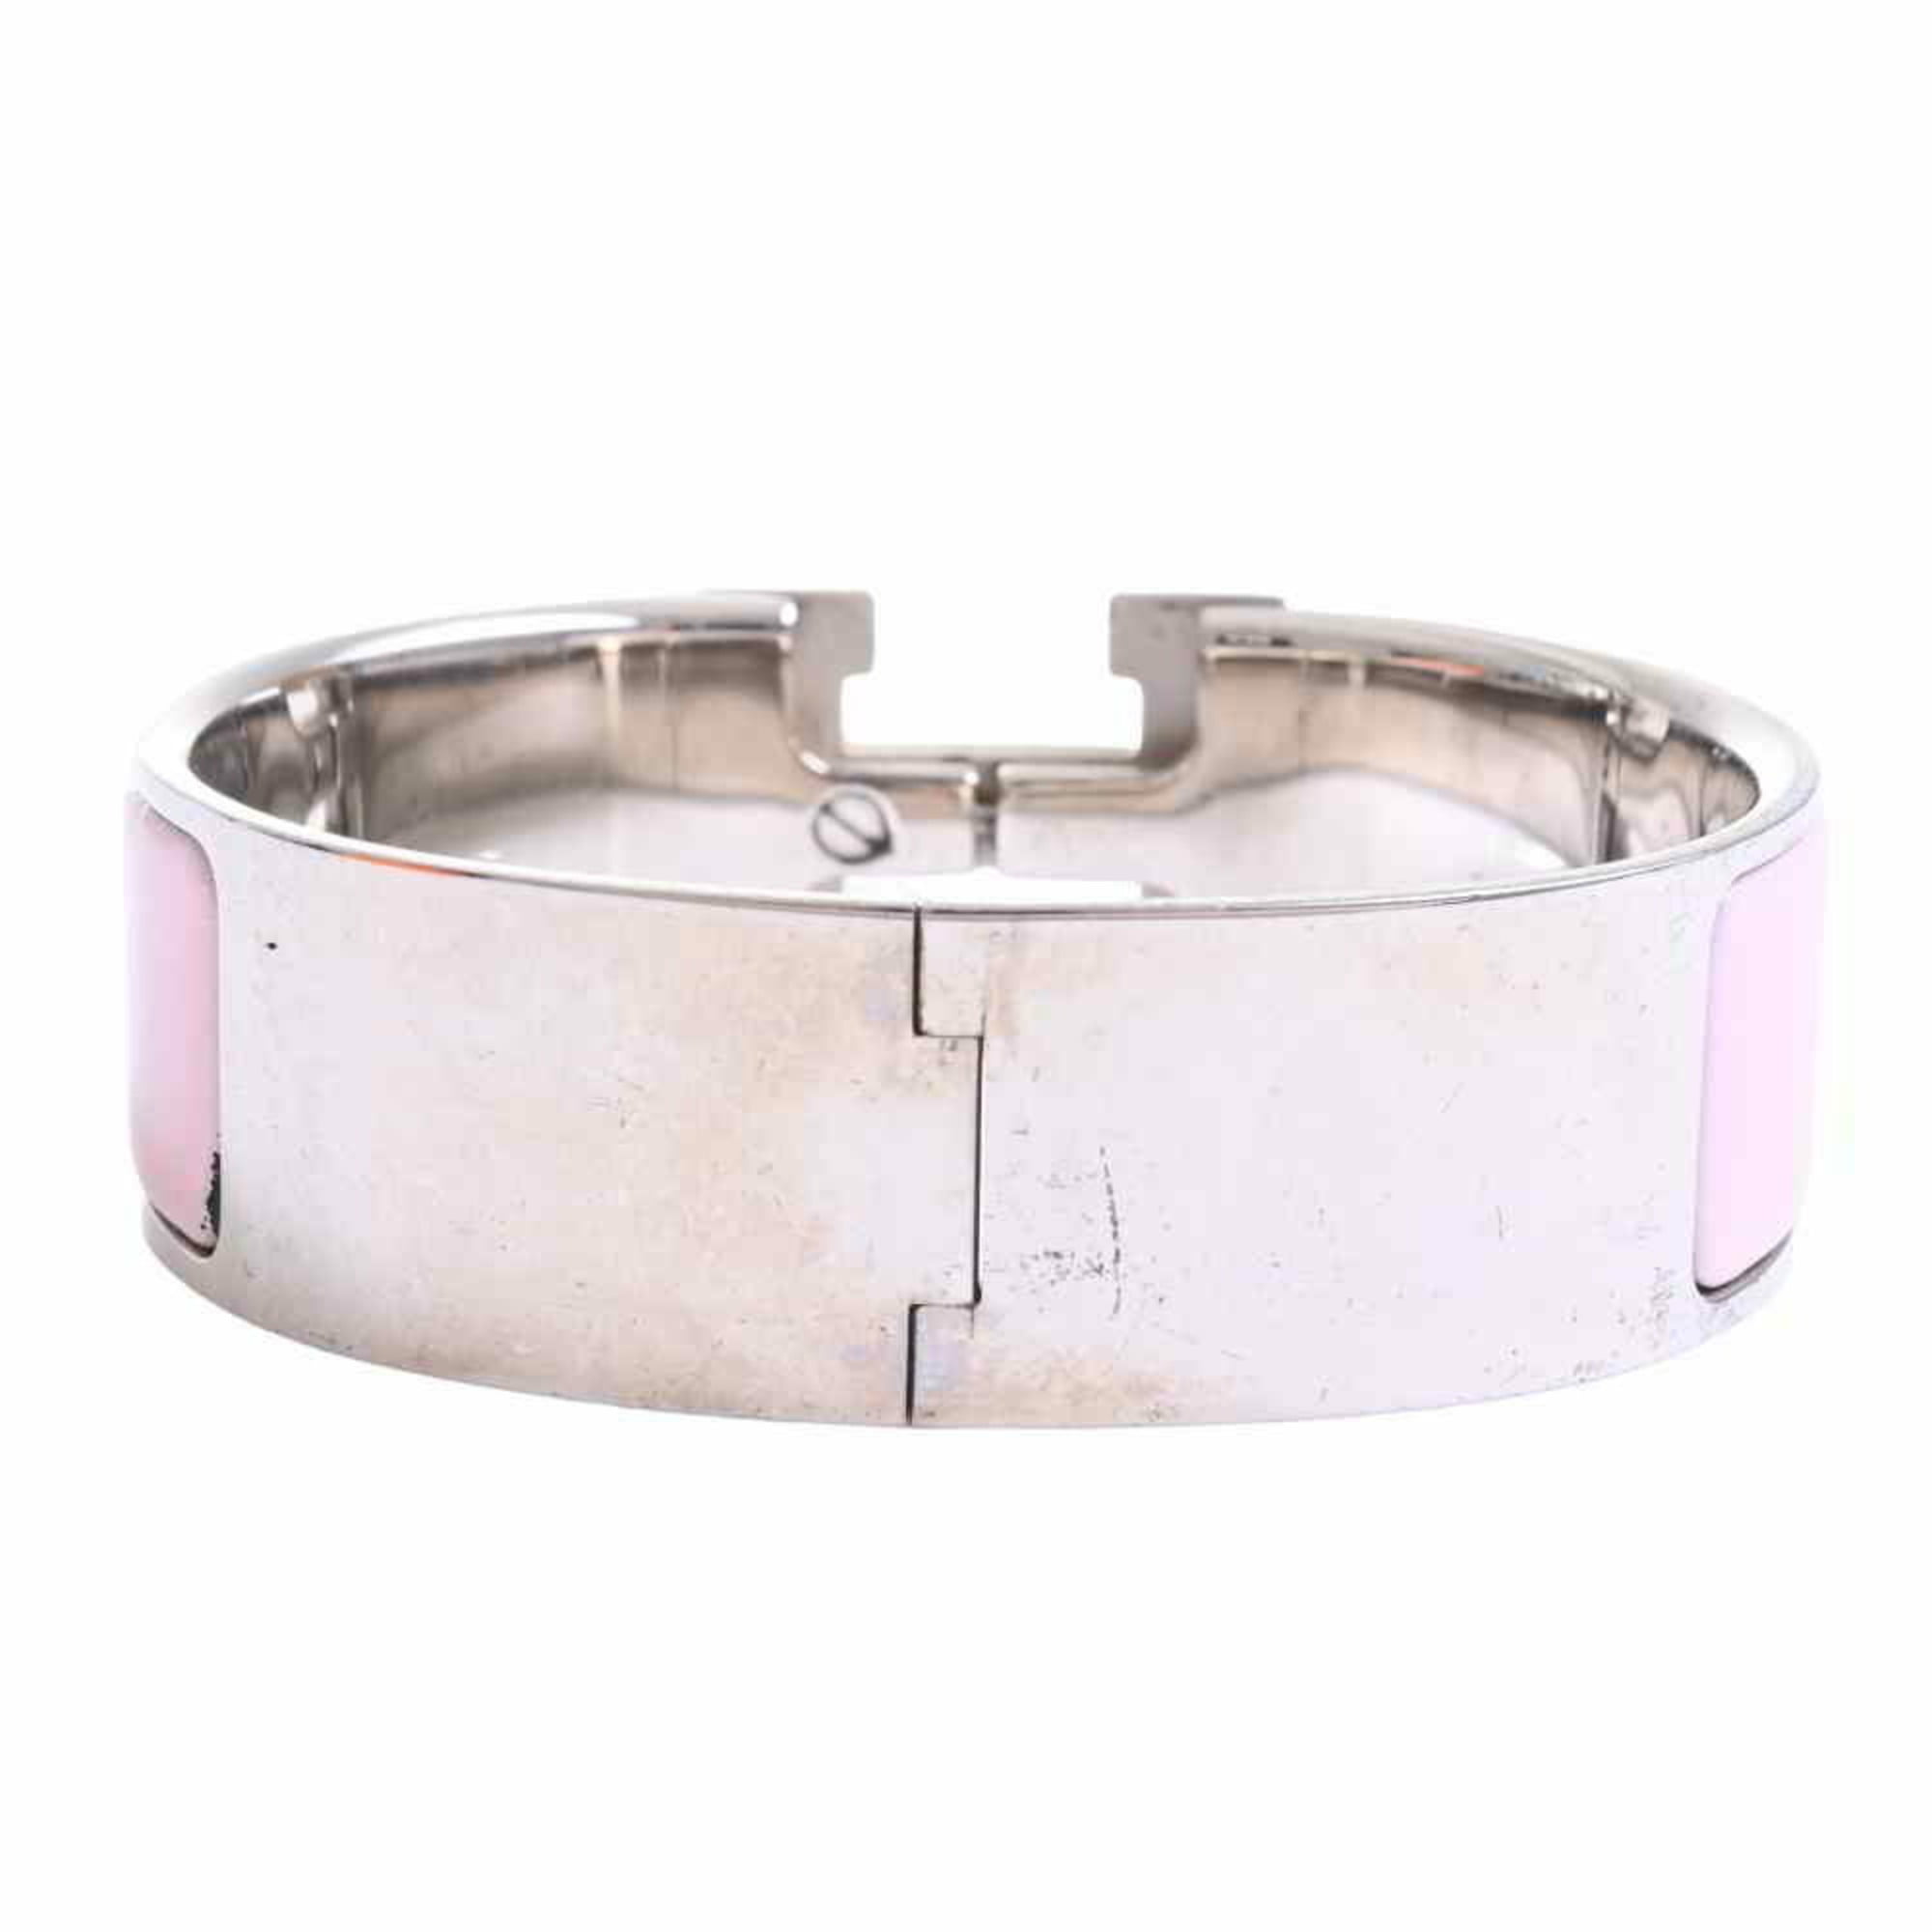 Authenticated Used HERMES Hermes click crack GM bracelet bangle pink metal  